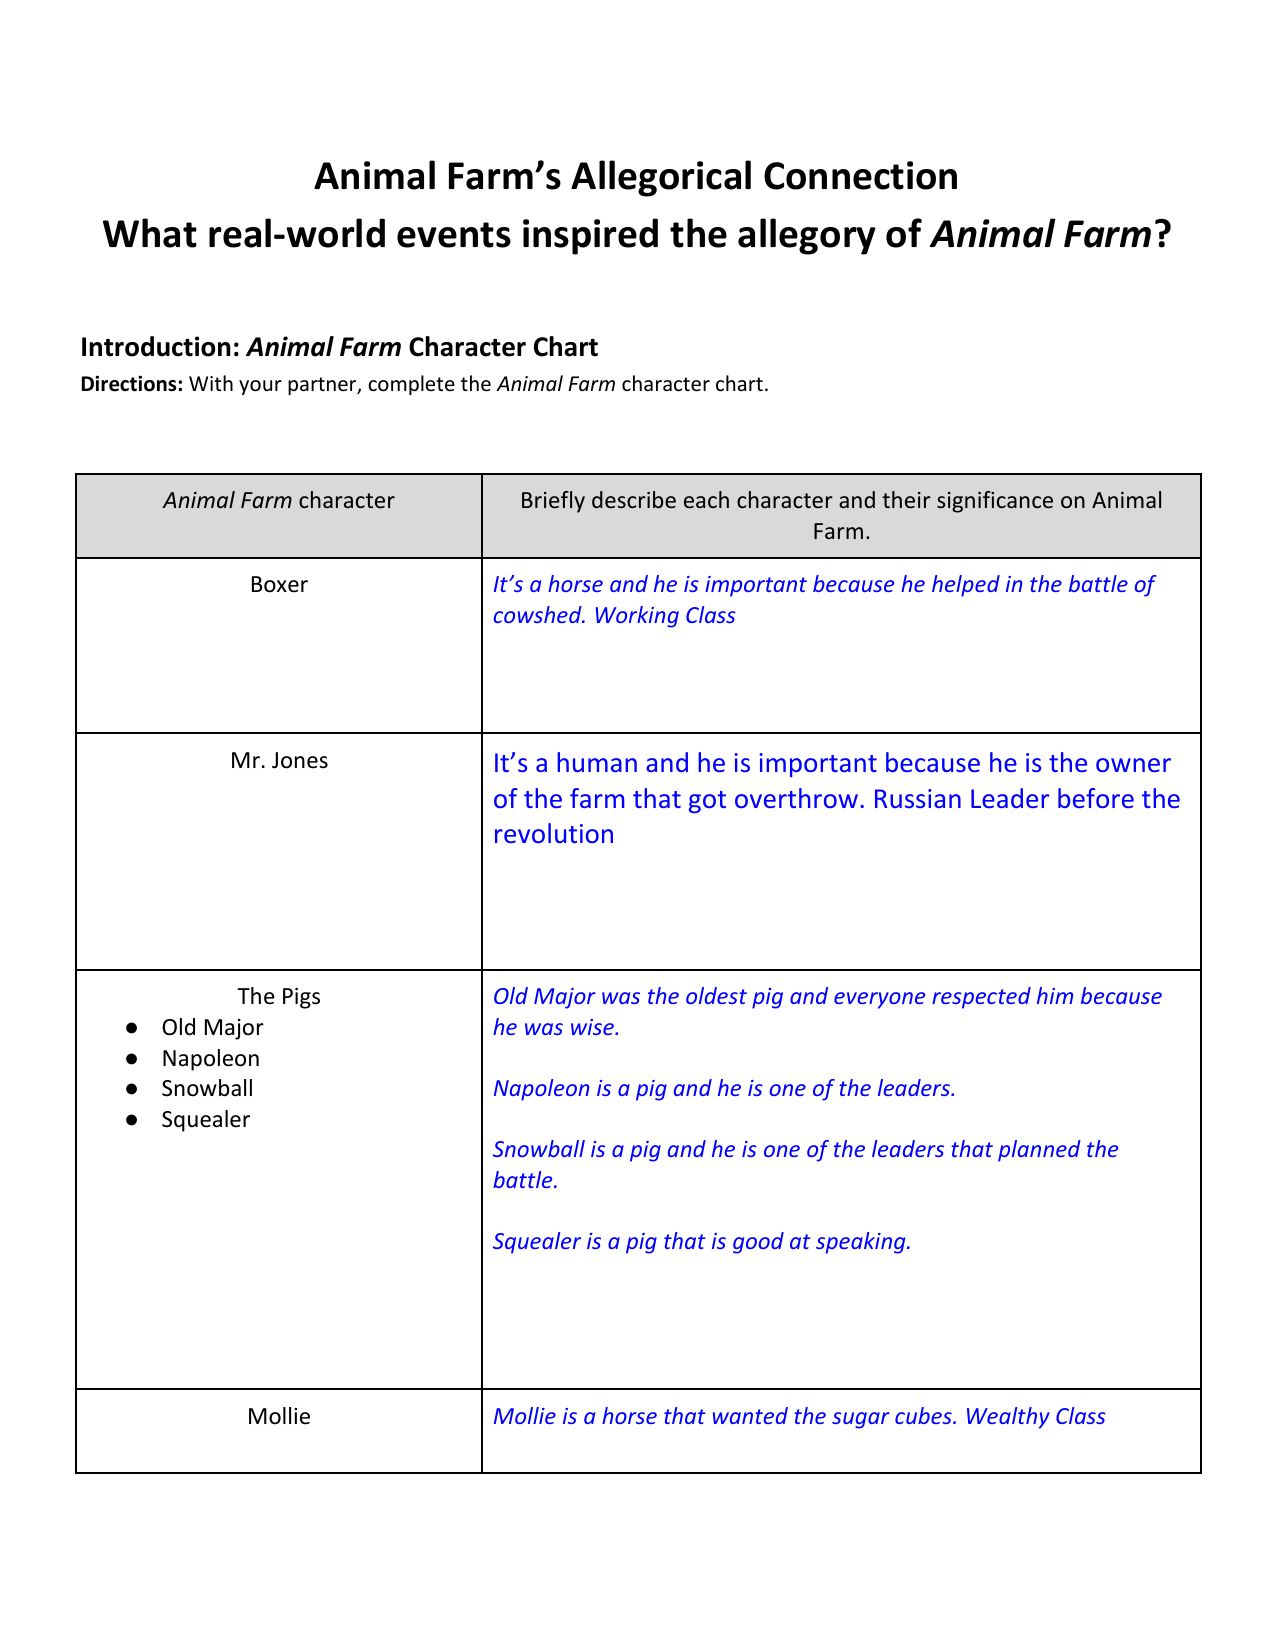 Animal Farms Allegorical Connection (1)